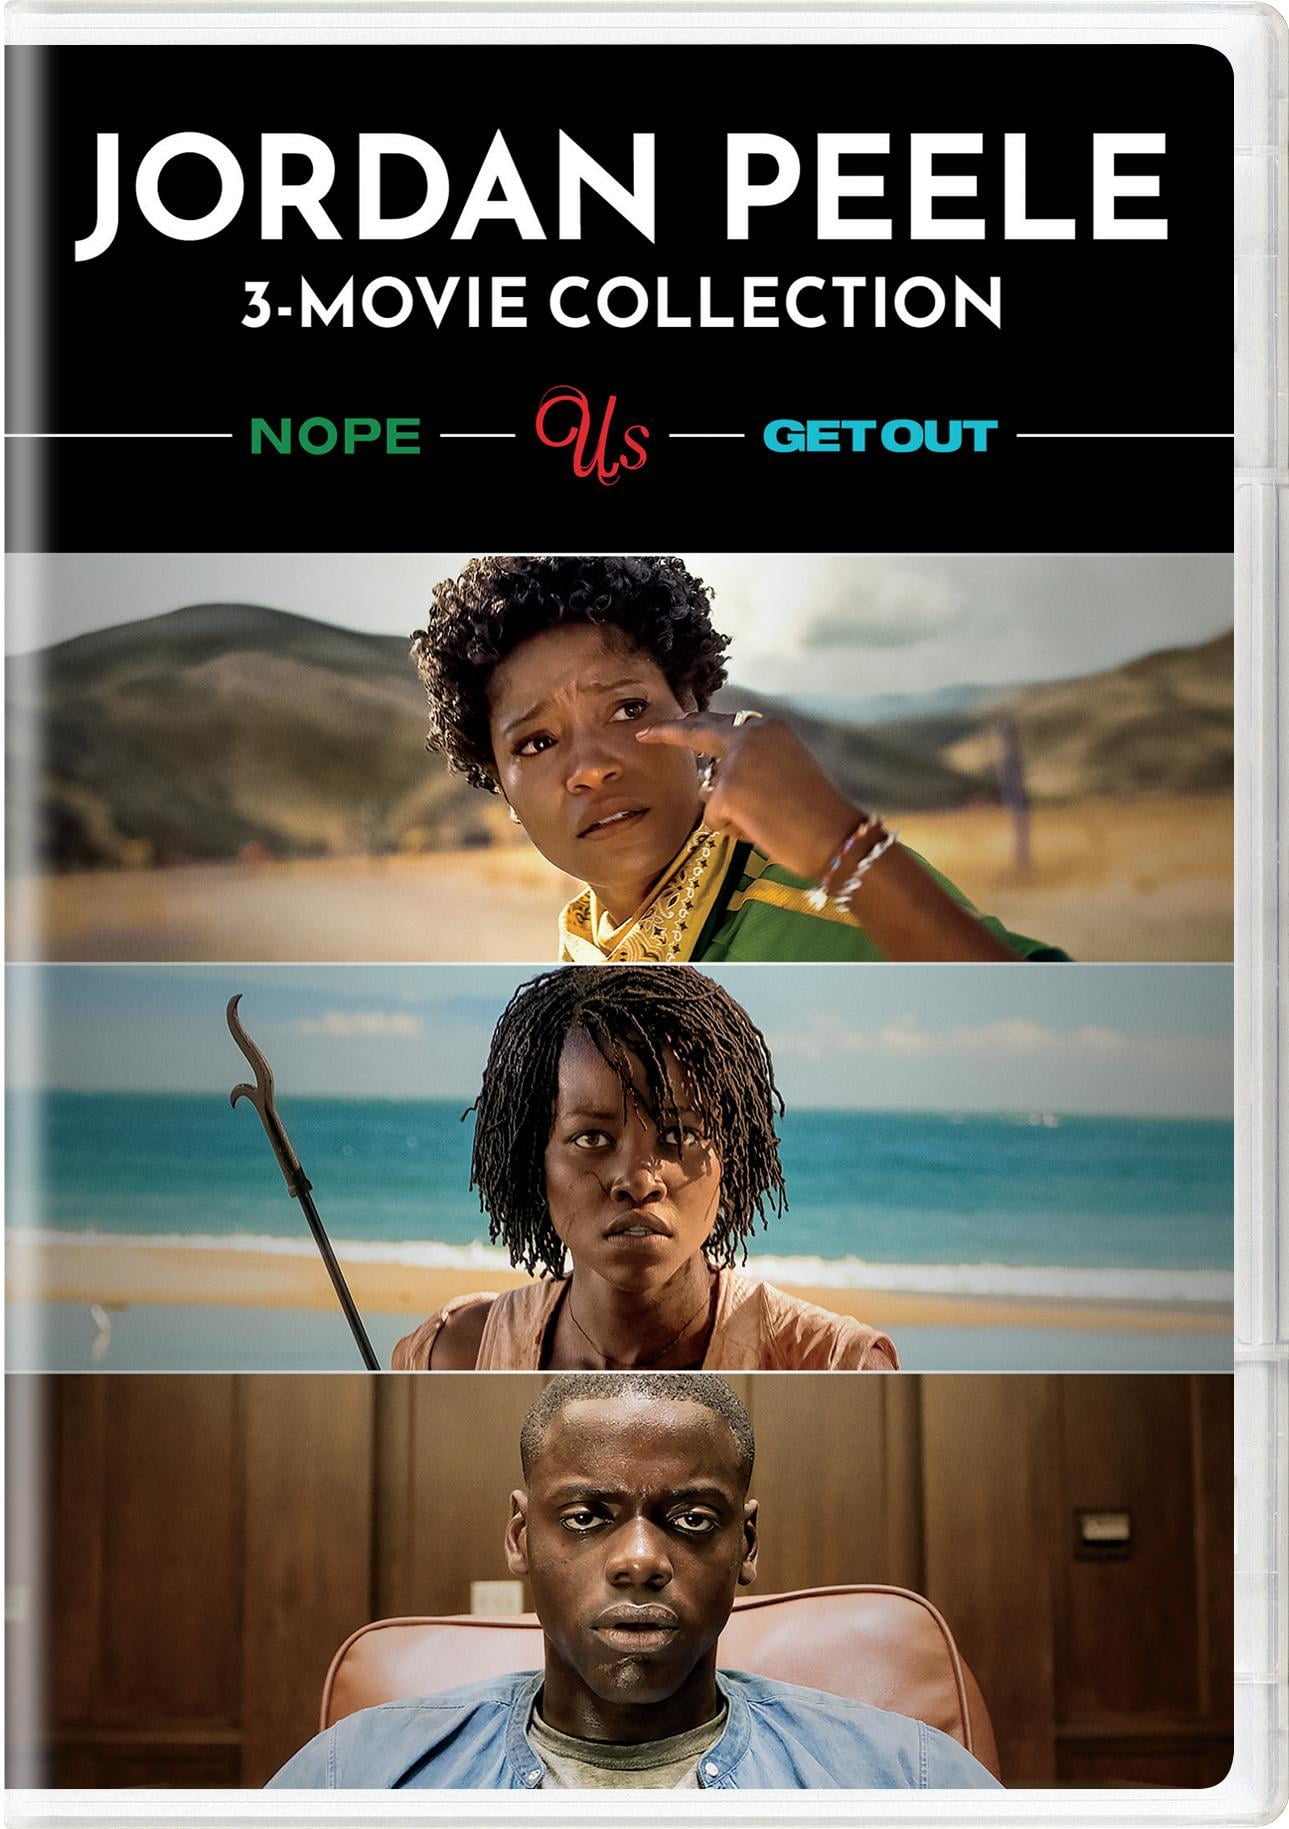 Universal Studios Jordan Peele 3-Movie Collection (Get Out / Us / Nope) (DVD)